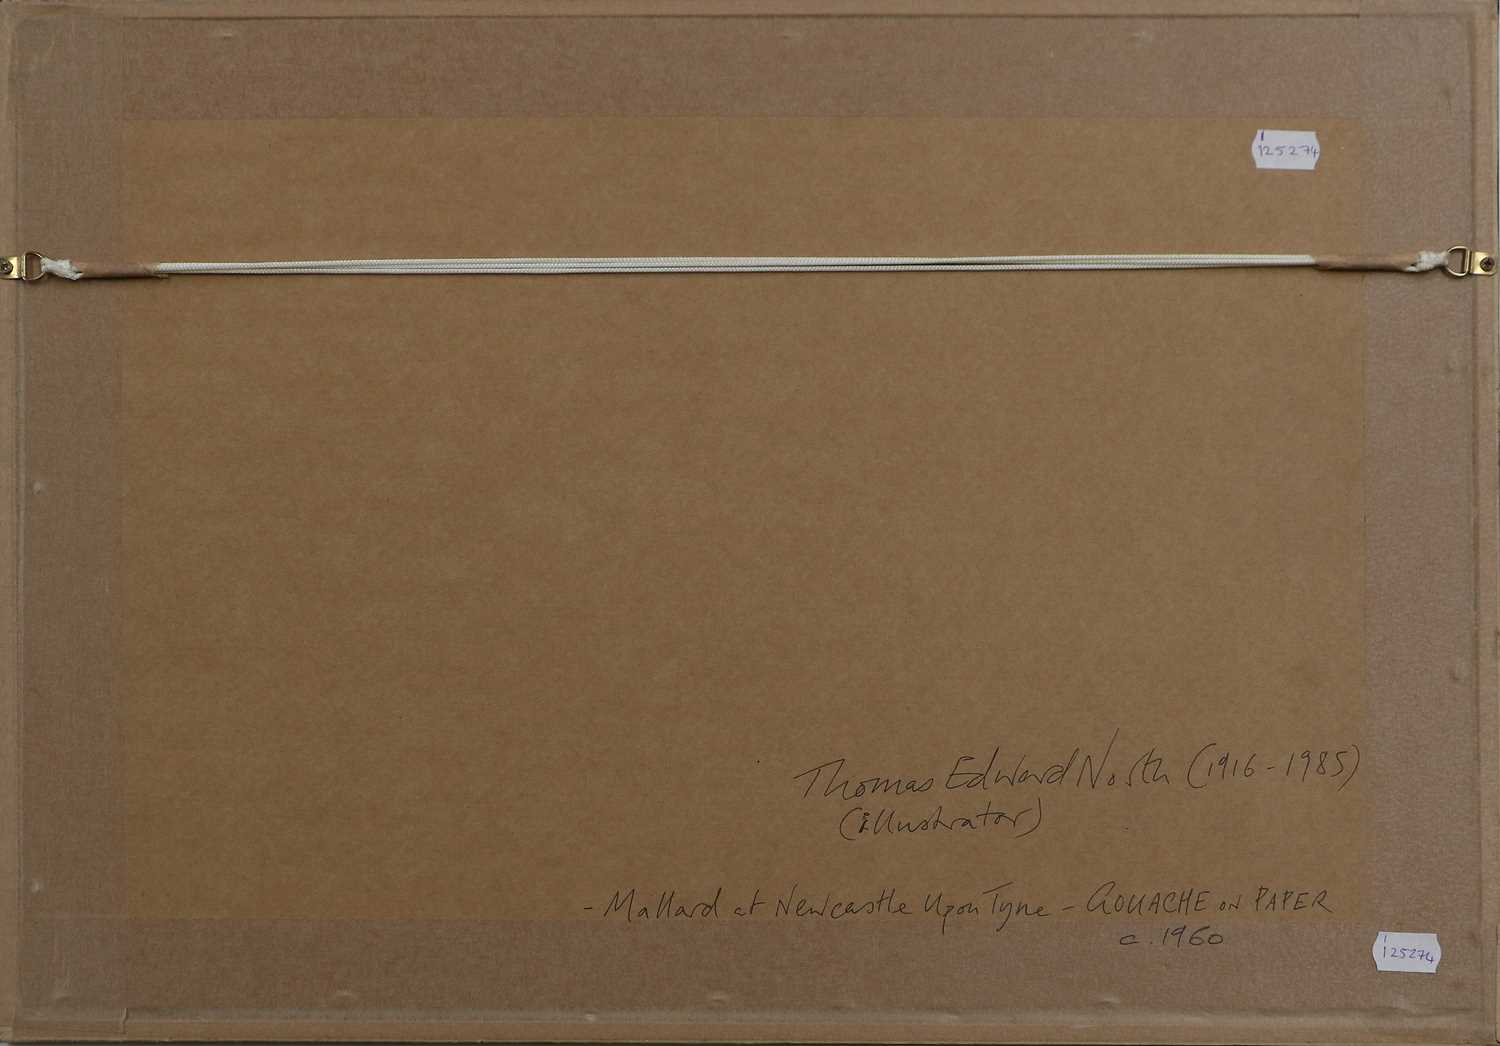 Thomas Edward North (1916-1985) Mallard at Newcastle upon Tyne Signed, inscribed verso, gouache, - Image 3 of 3